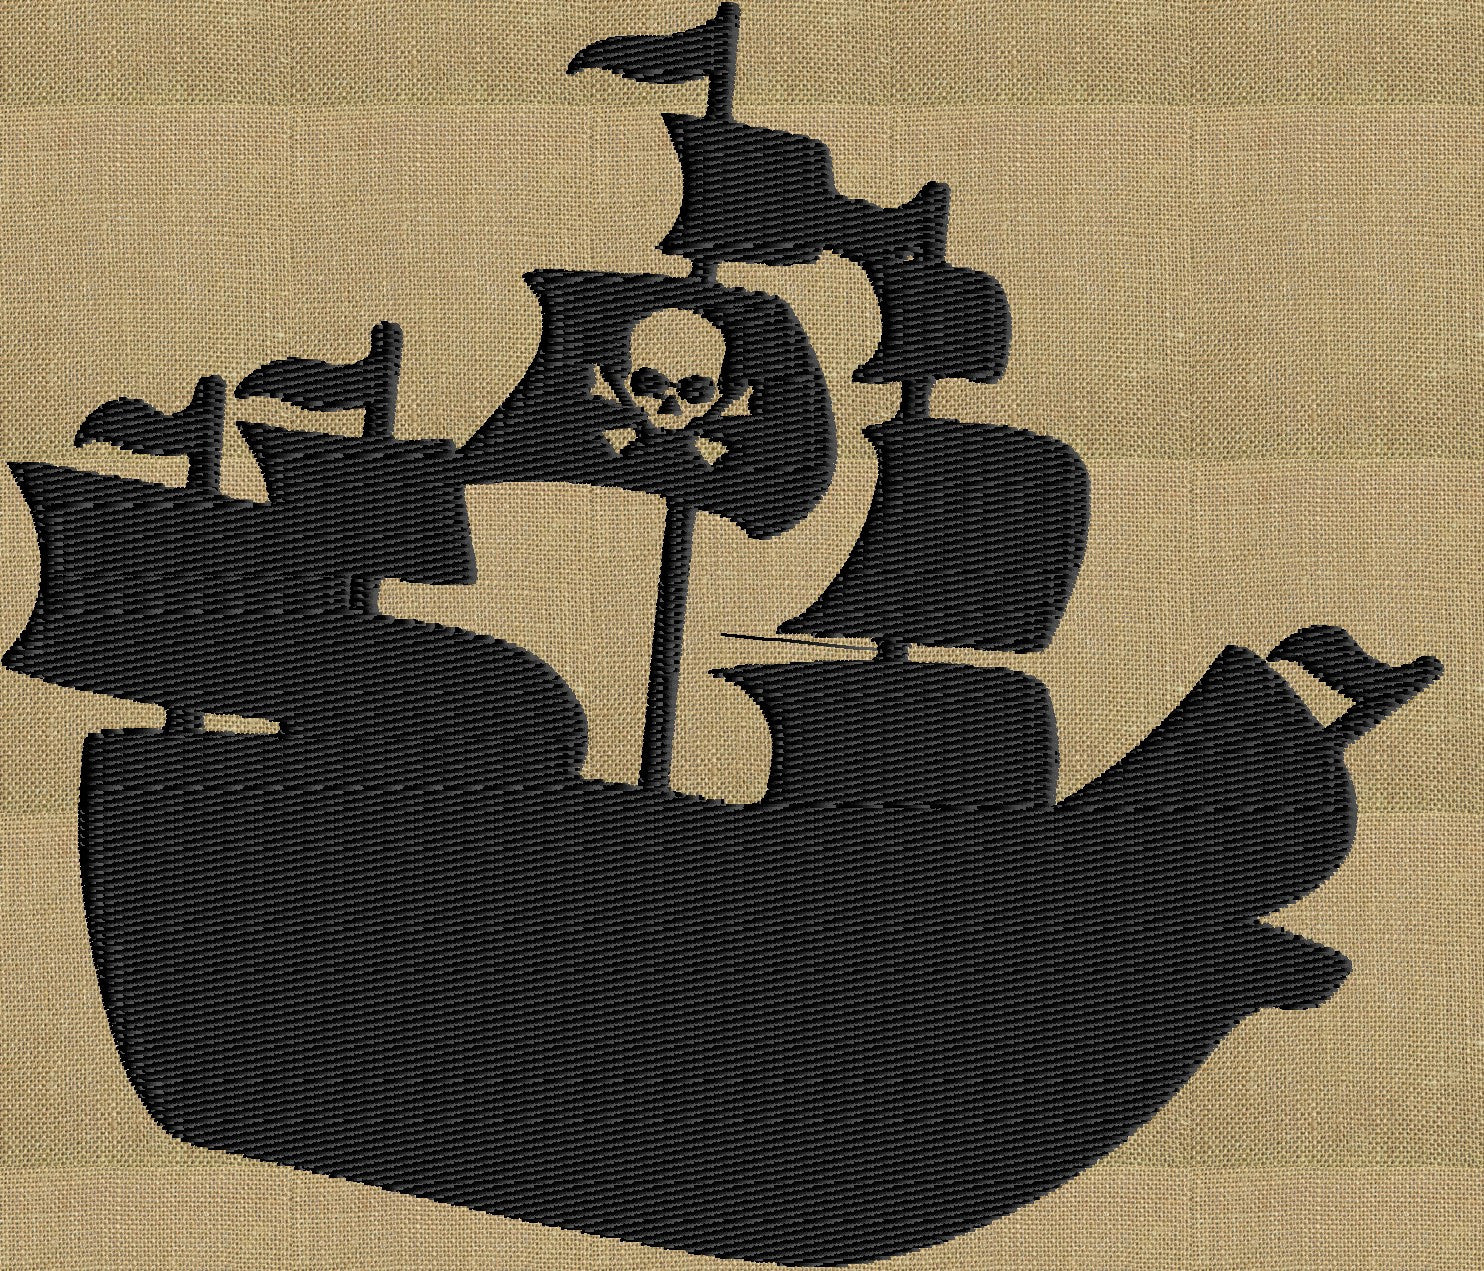 PIRATE SHIP Embroidery Design - EMBROIDERY Design FILE - Instant download - fun stuff